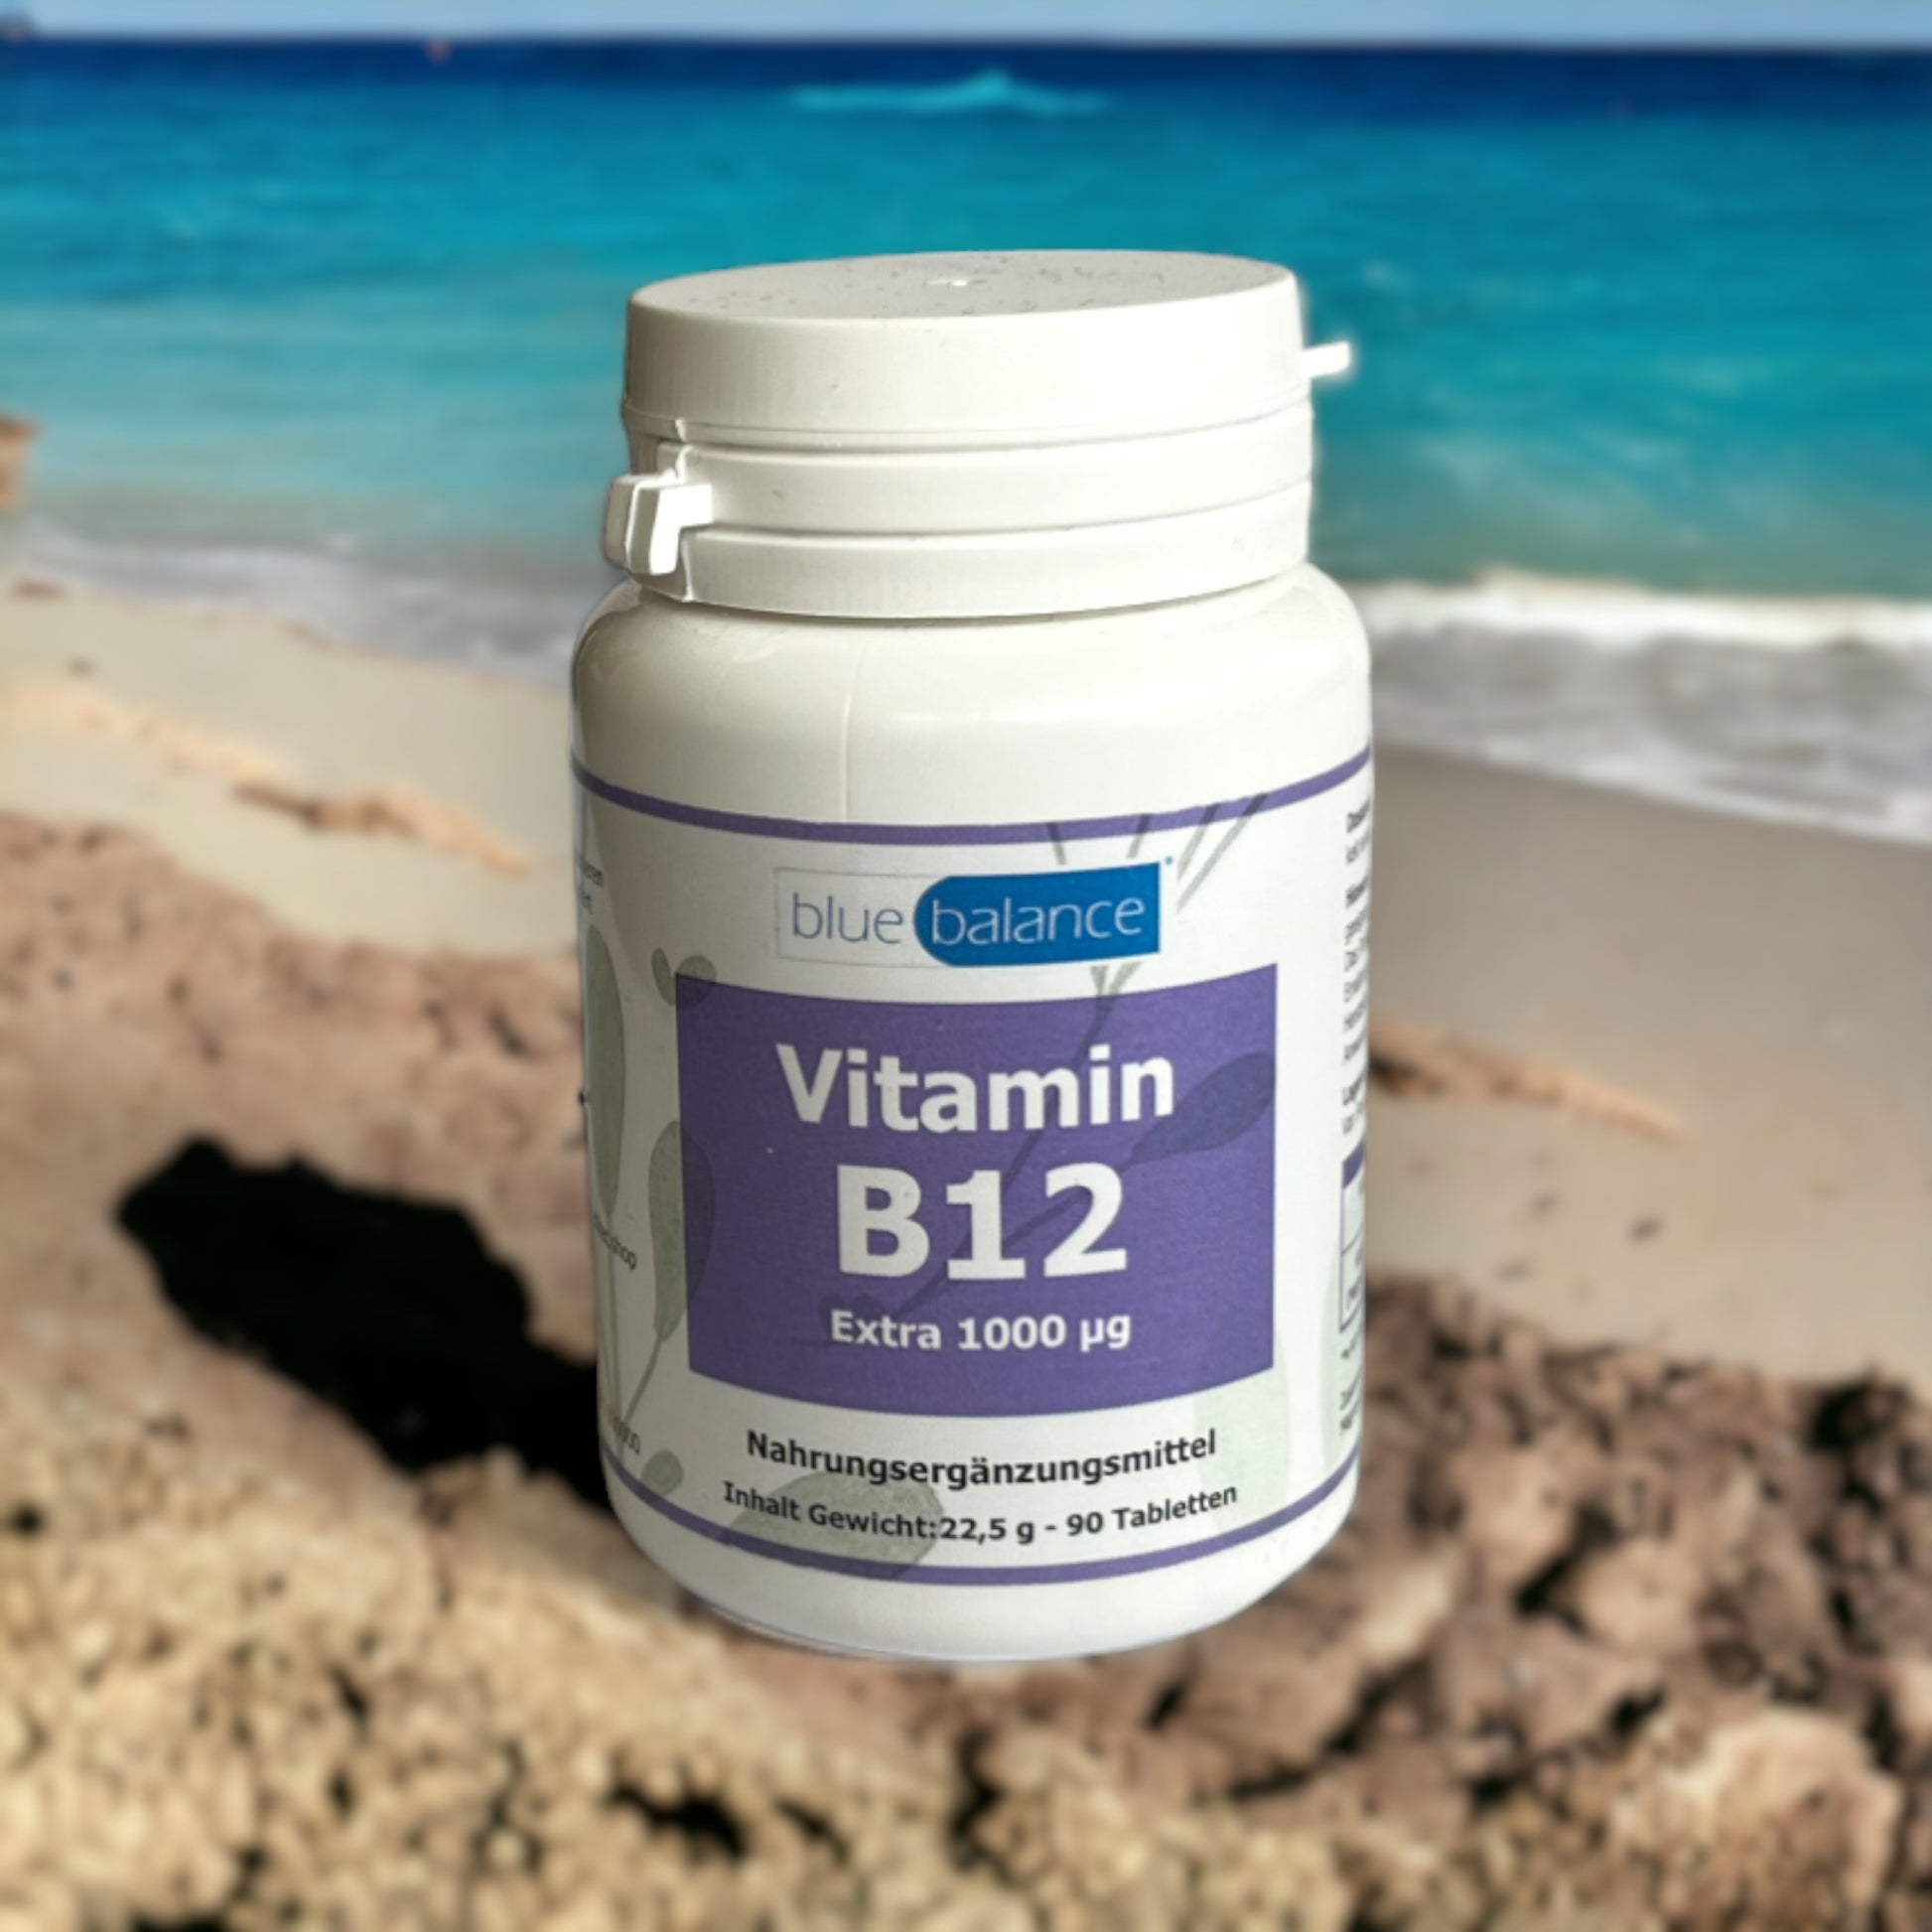 blue balance Vitamin B12 – Unterstützt Nervensystem & Energie. Vegan & hochwertig. 90 Tabletten.